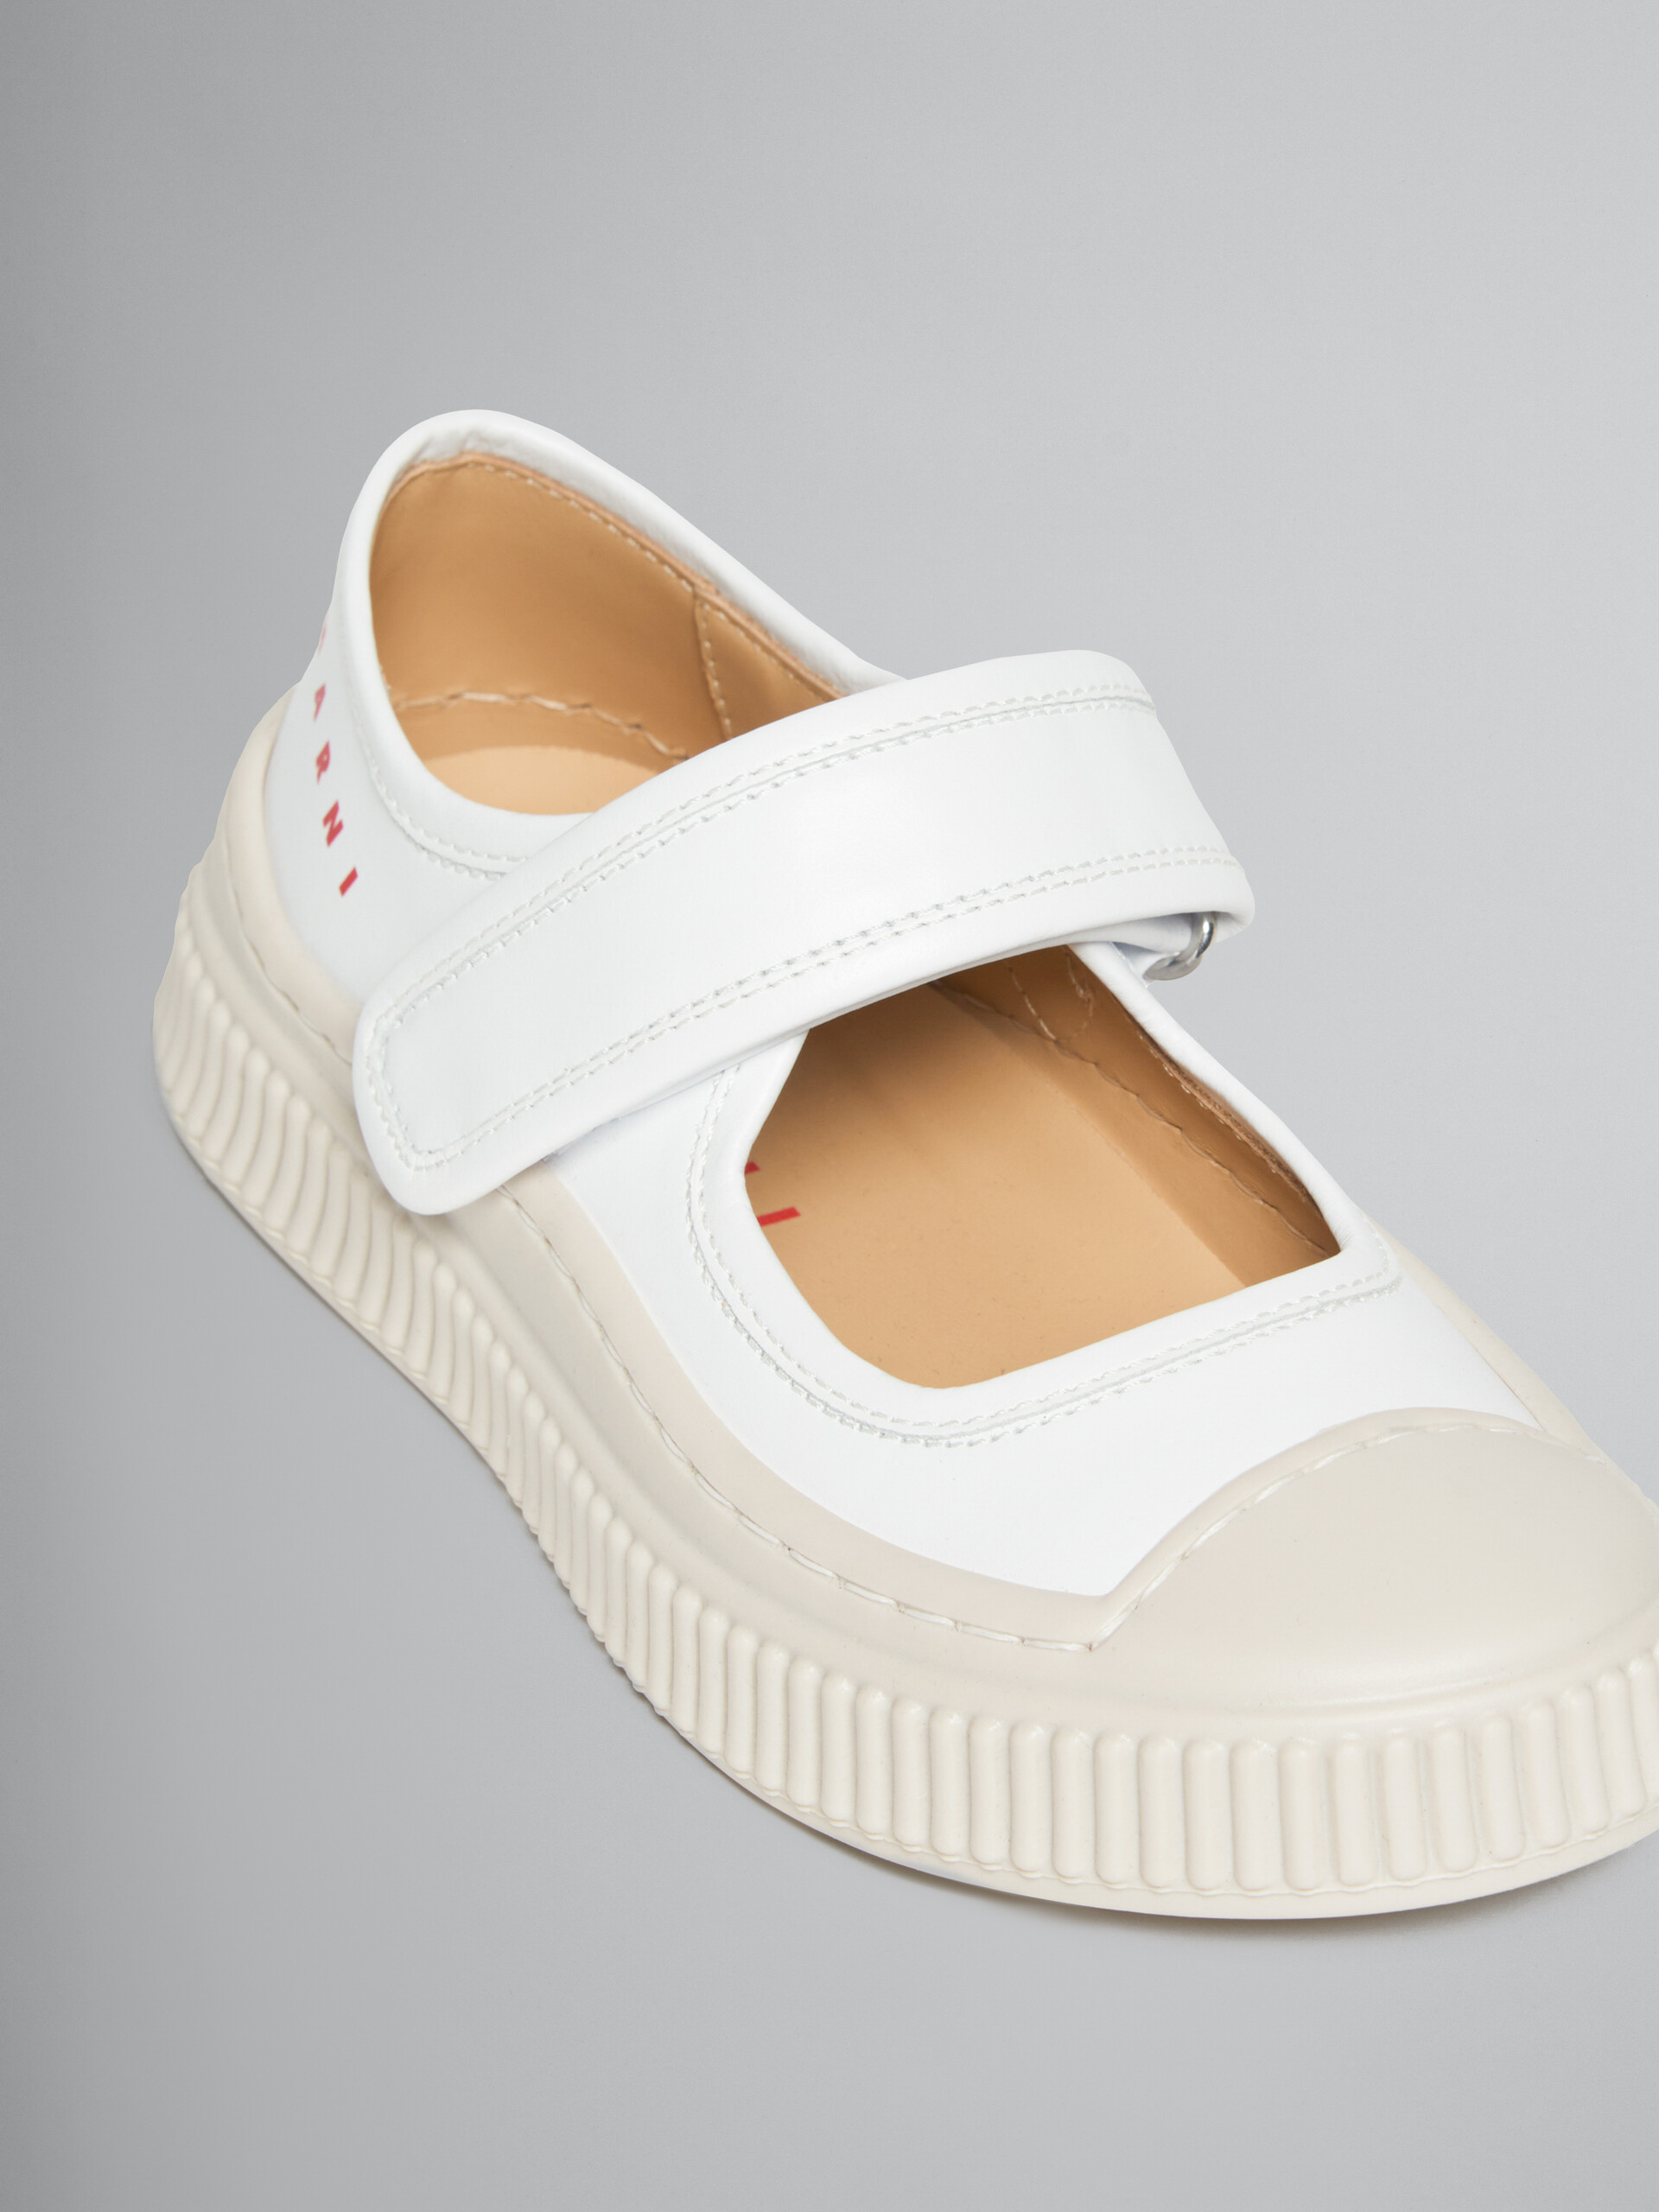 Mary-Jane Sneakers aus weißem Leder - KINDER - Image 4